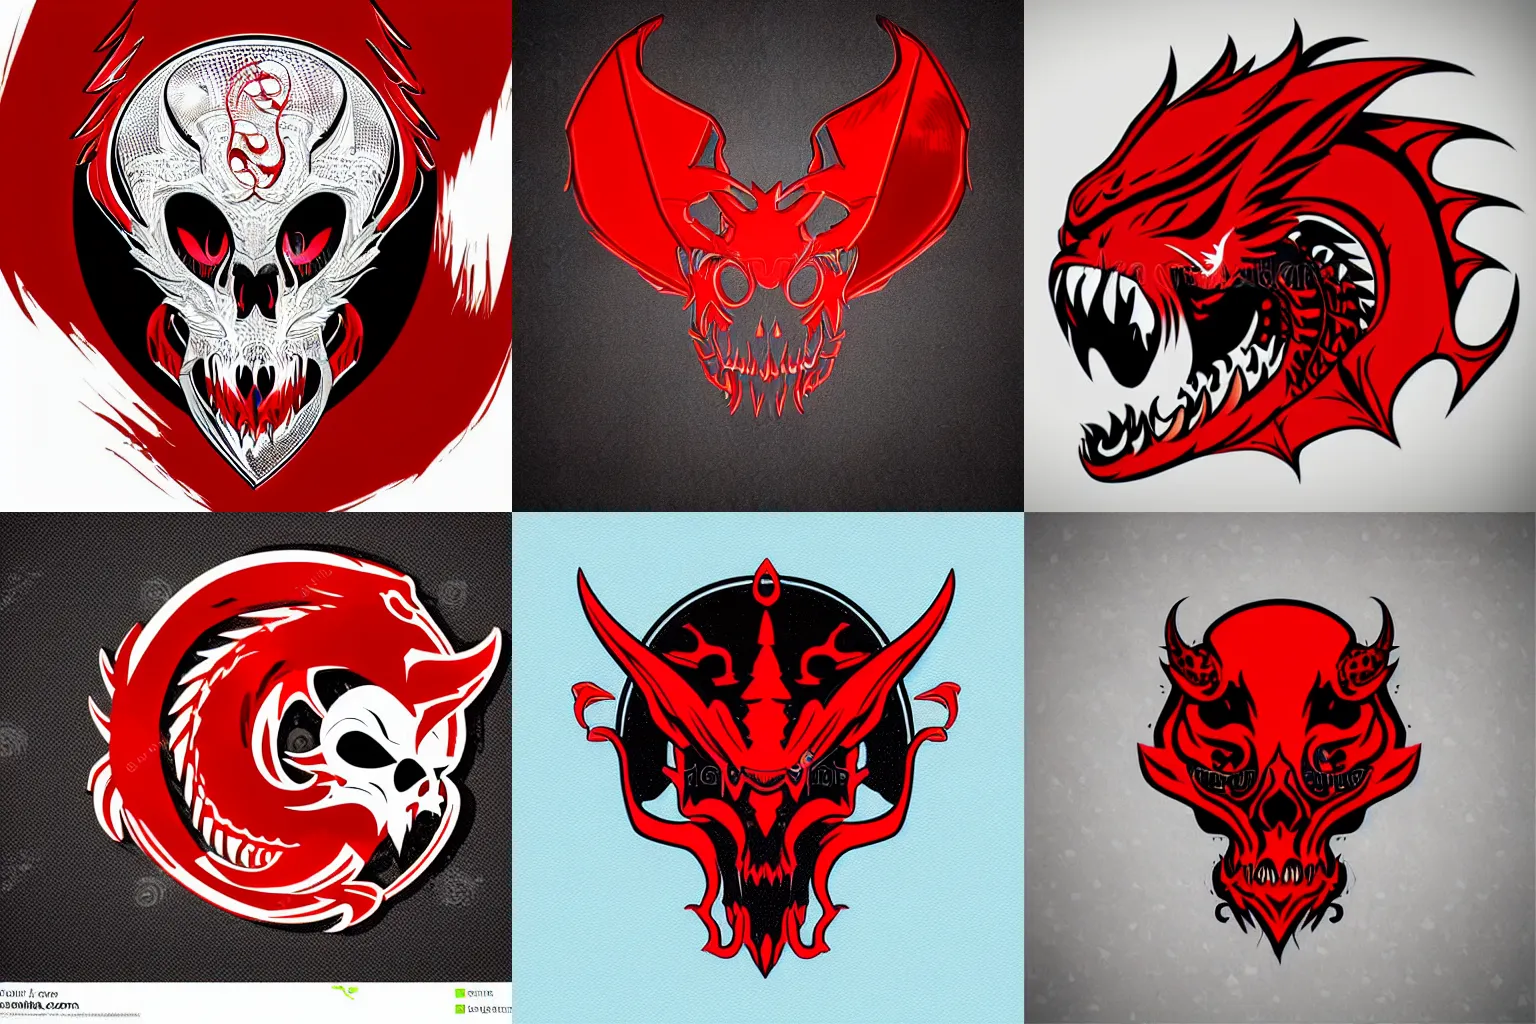 Prompt: red dragon skull portrait modern digital sharp detailed cybersport logo twitch streamer logo beautiful vector illustration premium quality